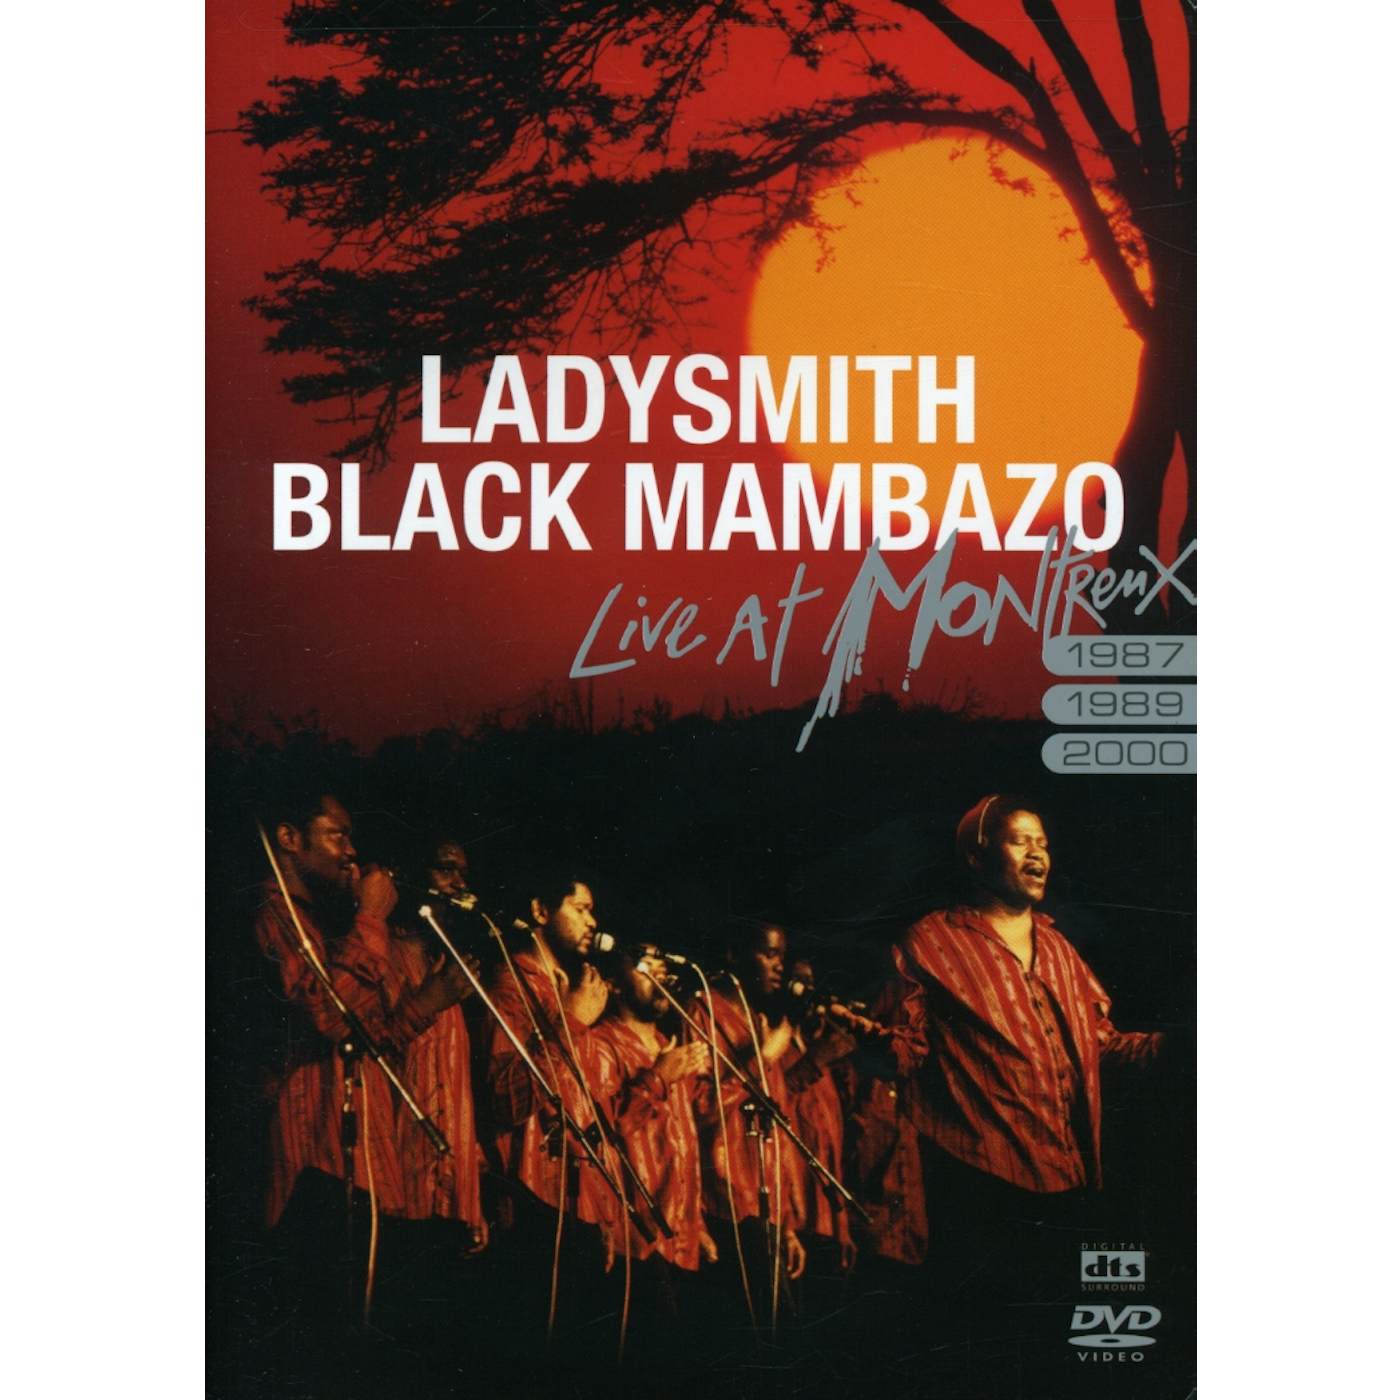 Ladysmith Black Mambazo LIVE AT MONTREUX 1987 1989 2000 DVD